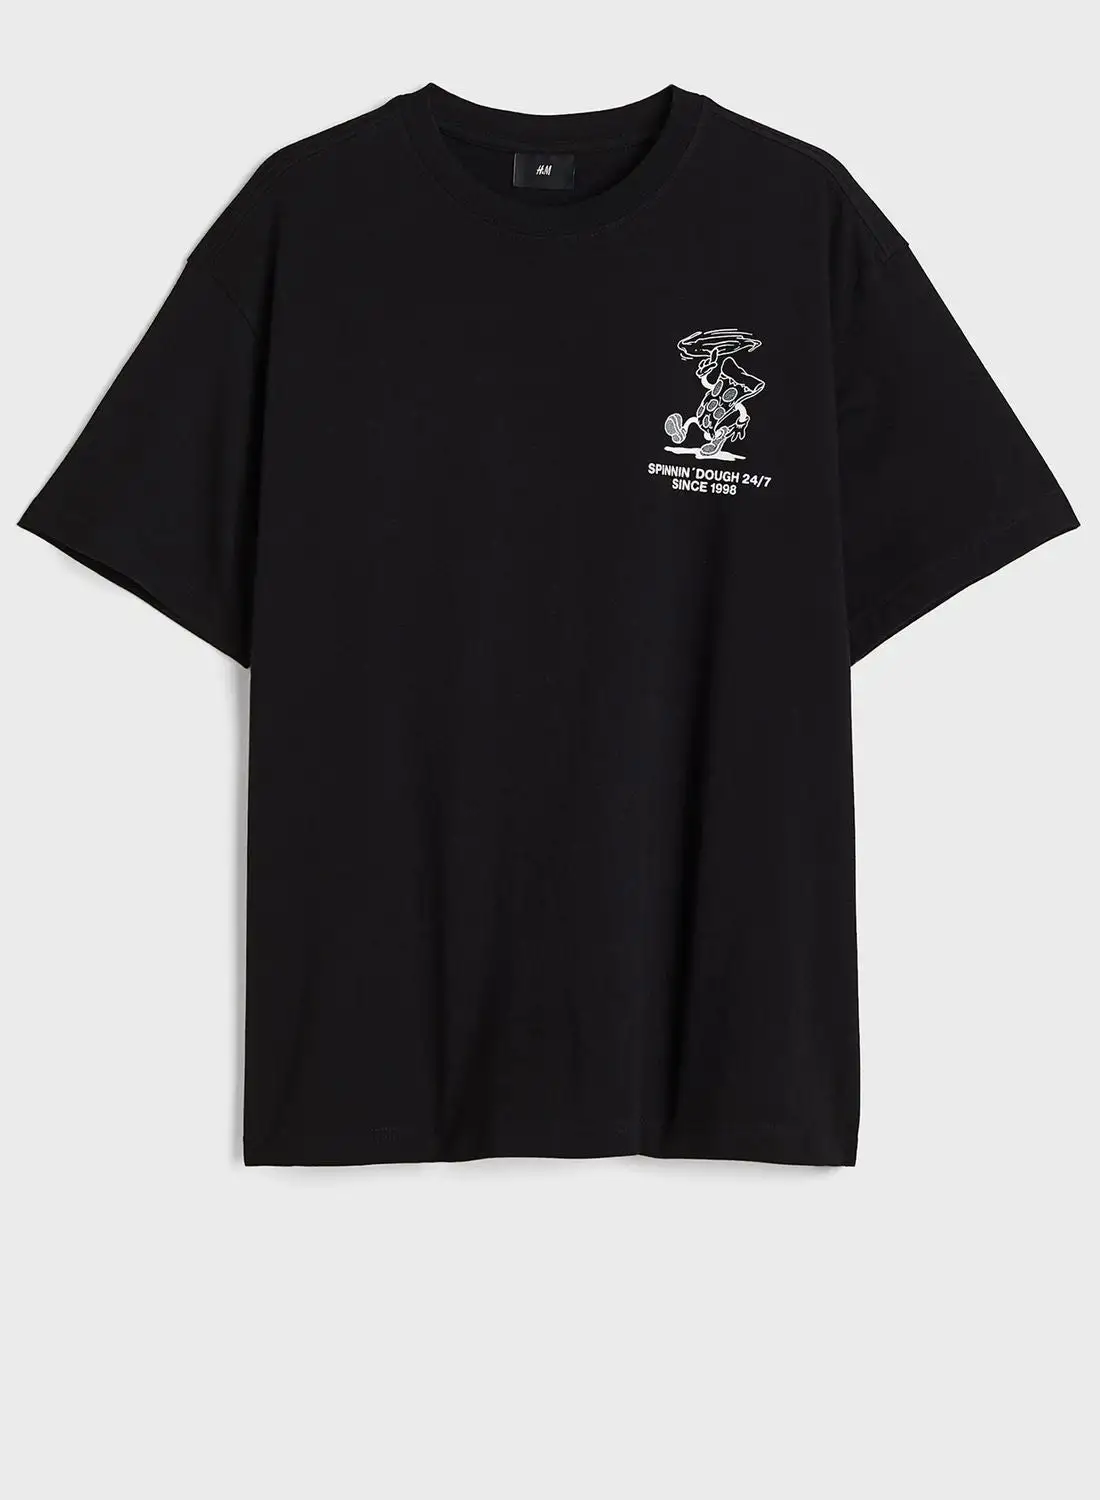 H&M Graphic Crew Neck T-Shirt